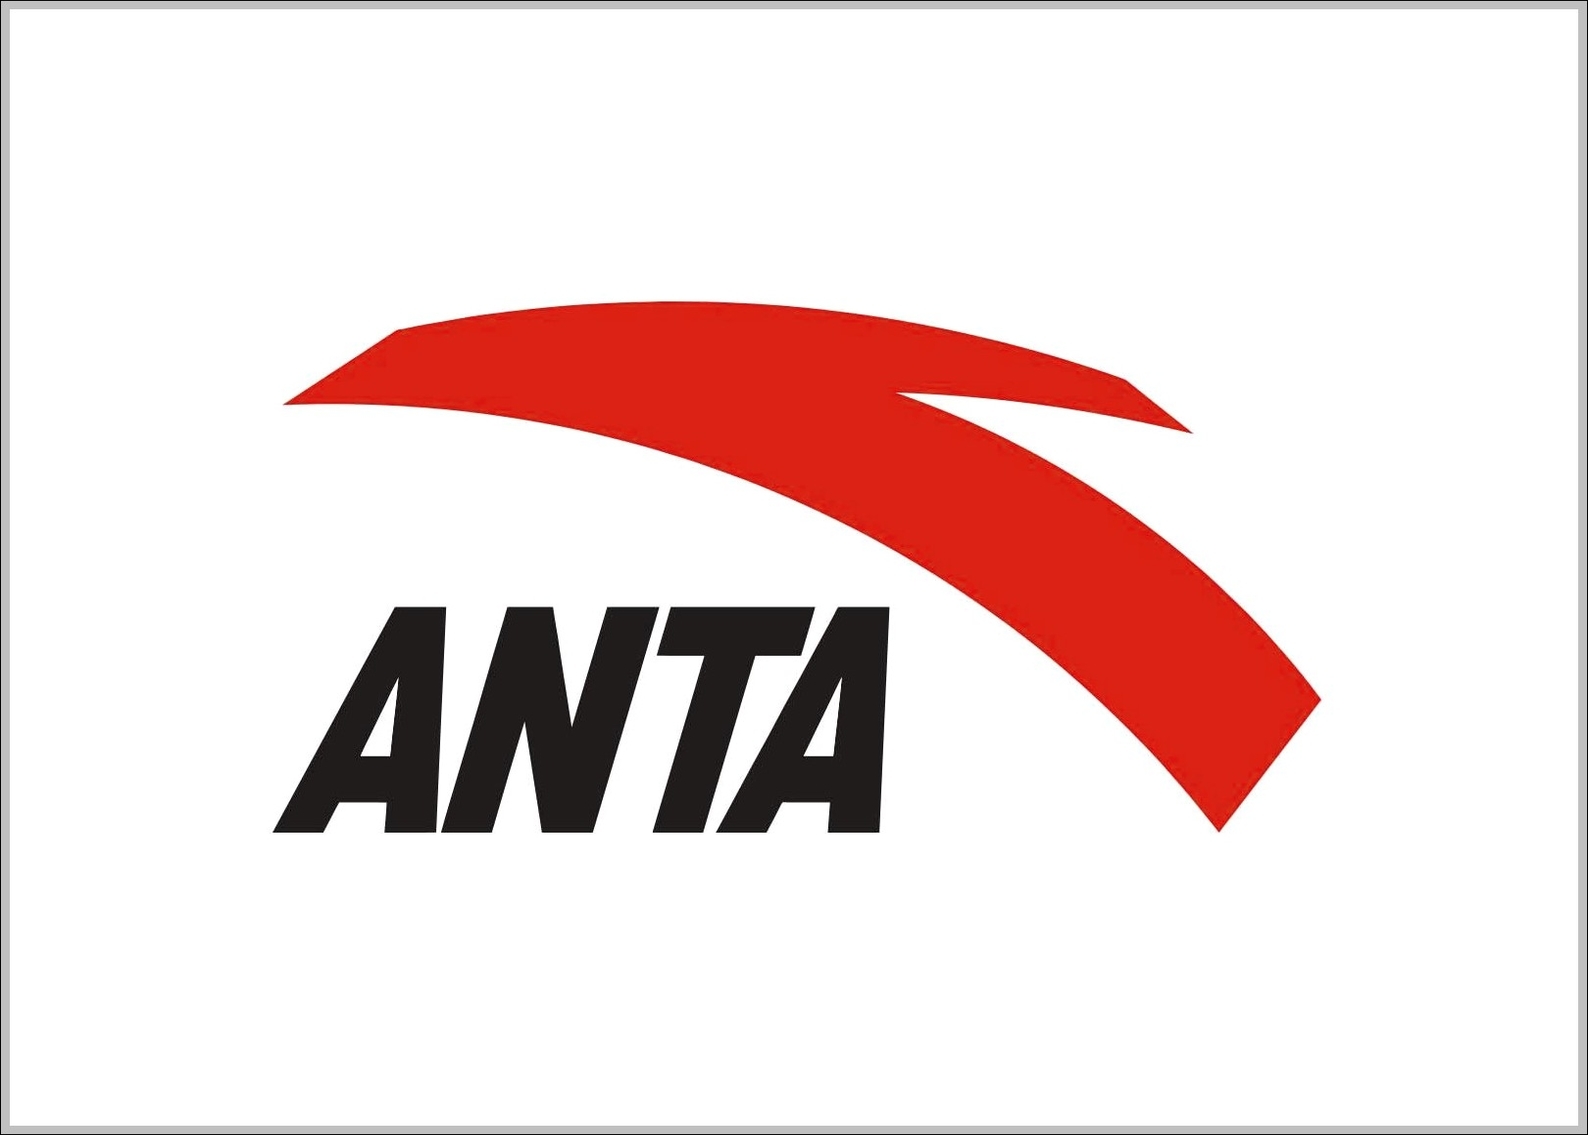 ANTA logo and symbol